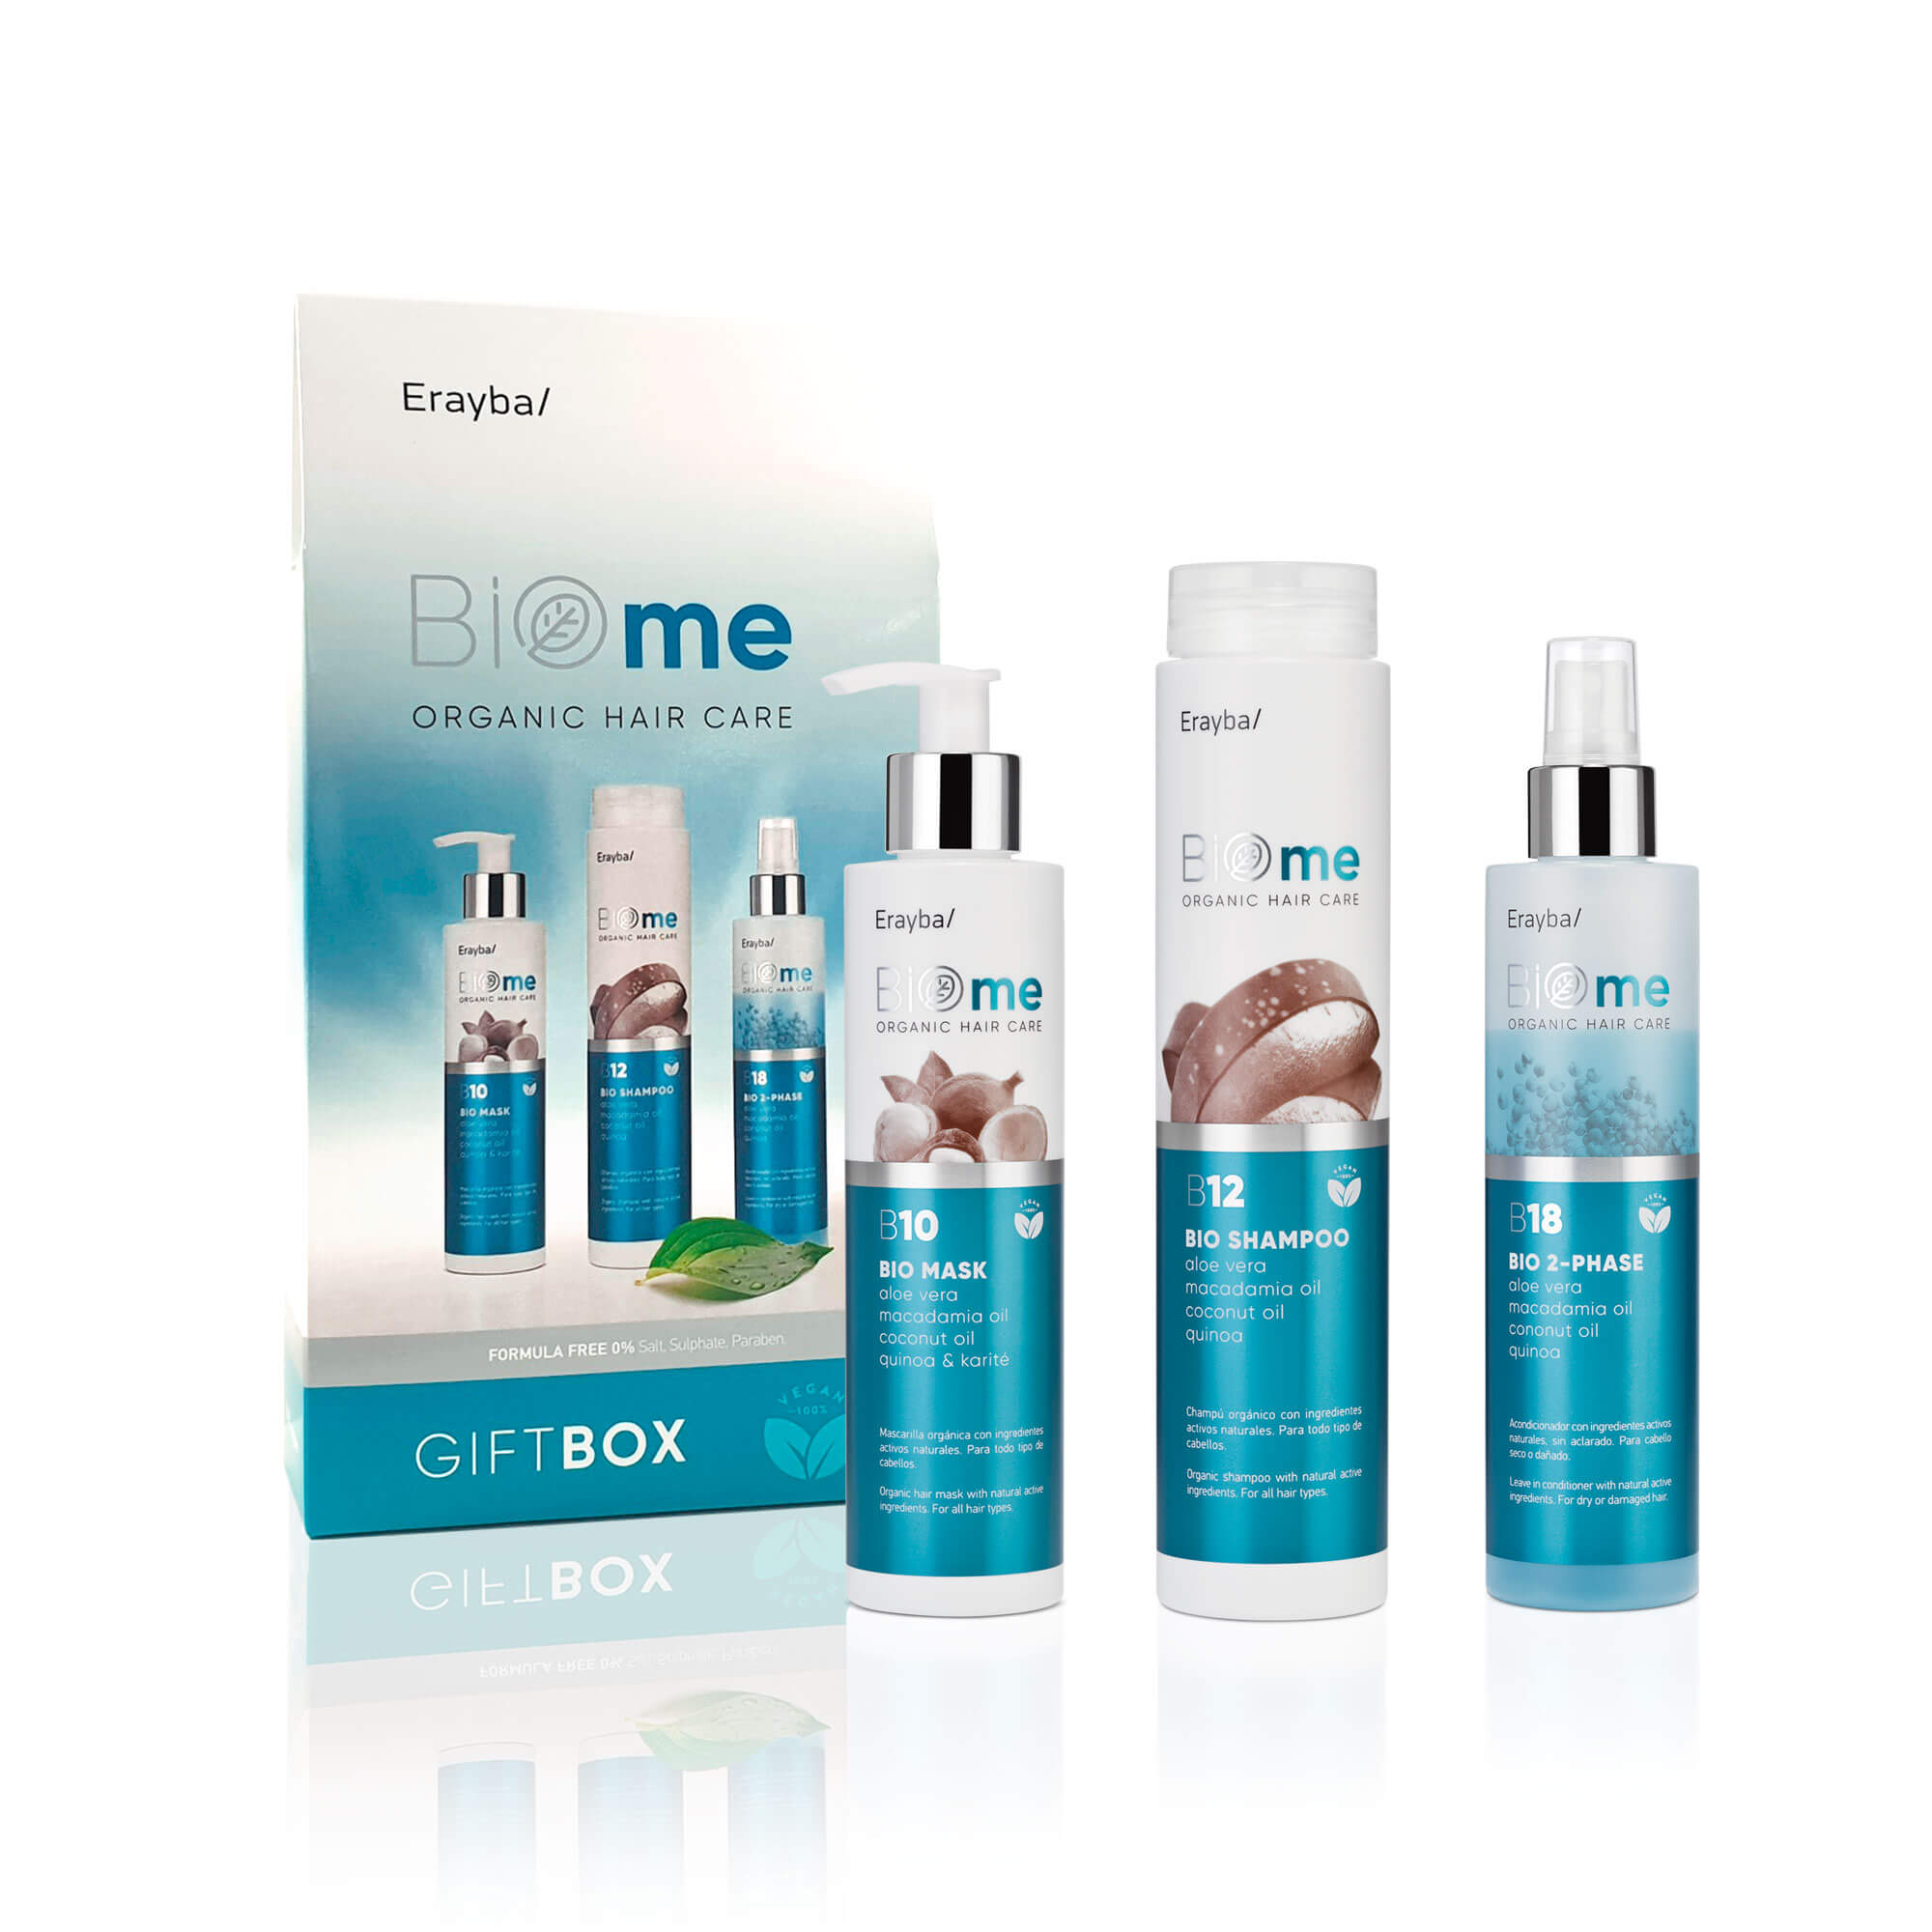 BIOme gift box - shampoo, mask & 2-phase - Erayba